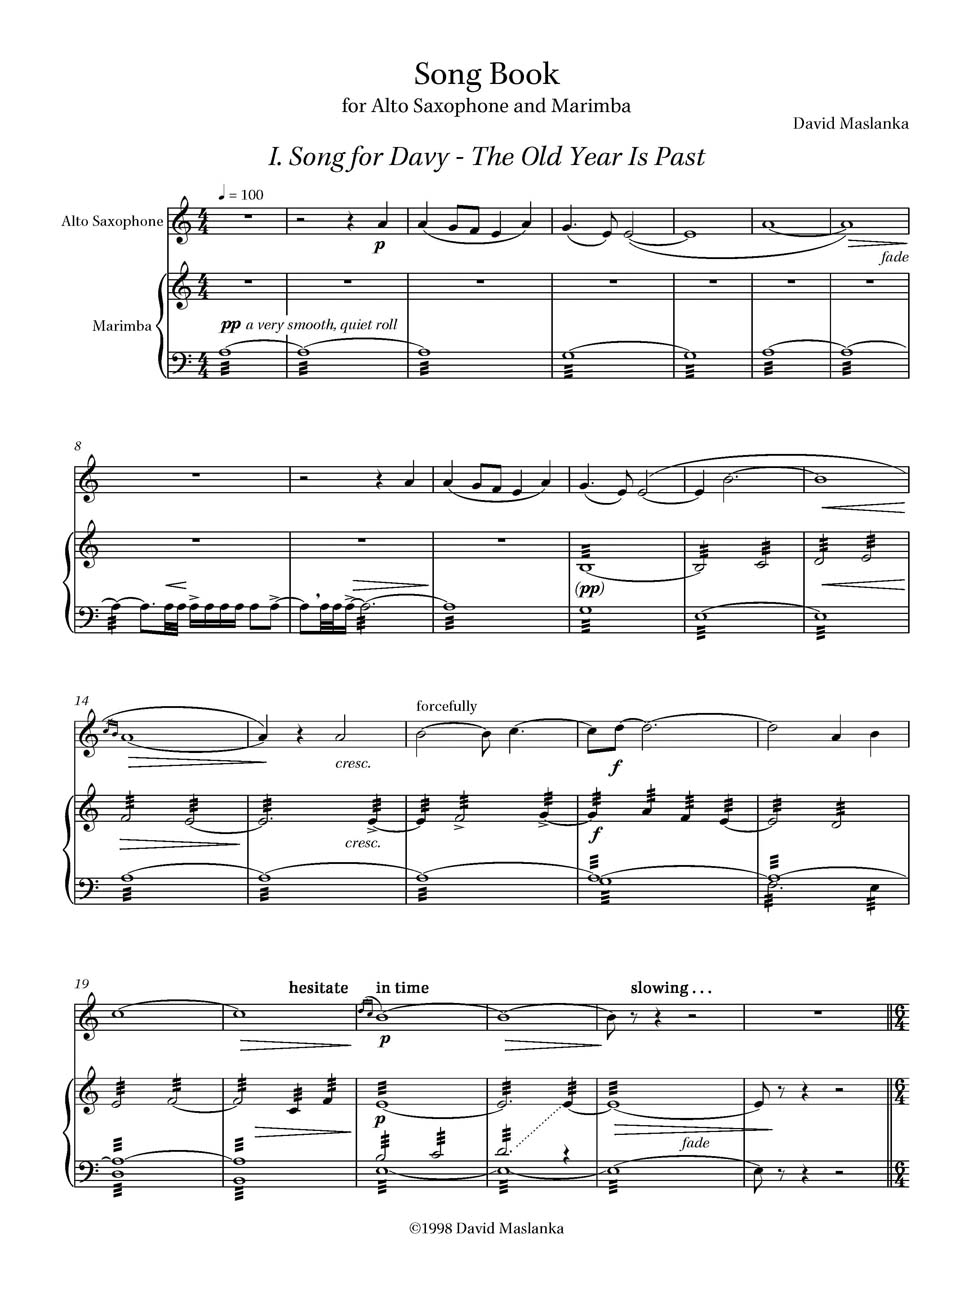 Song Book For Alto Saxophone And Marimba David Maslanka